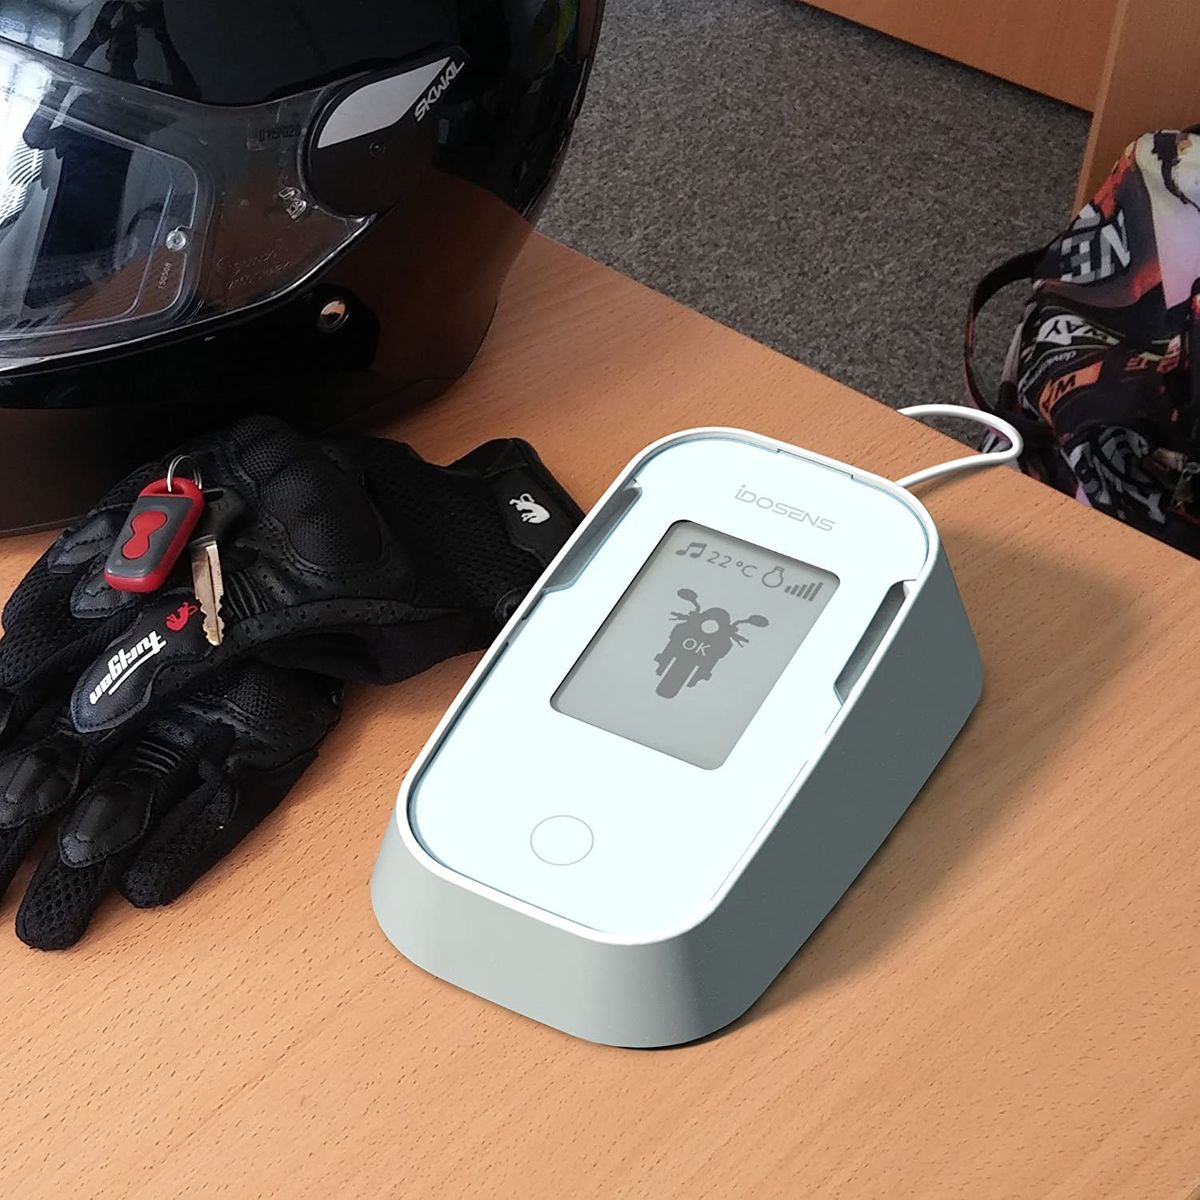 IDOSENS Bikesens – Motion Sensor Alarm for Motorcycle and Scooter